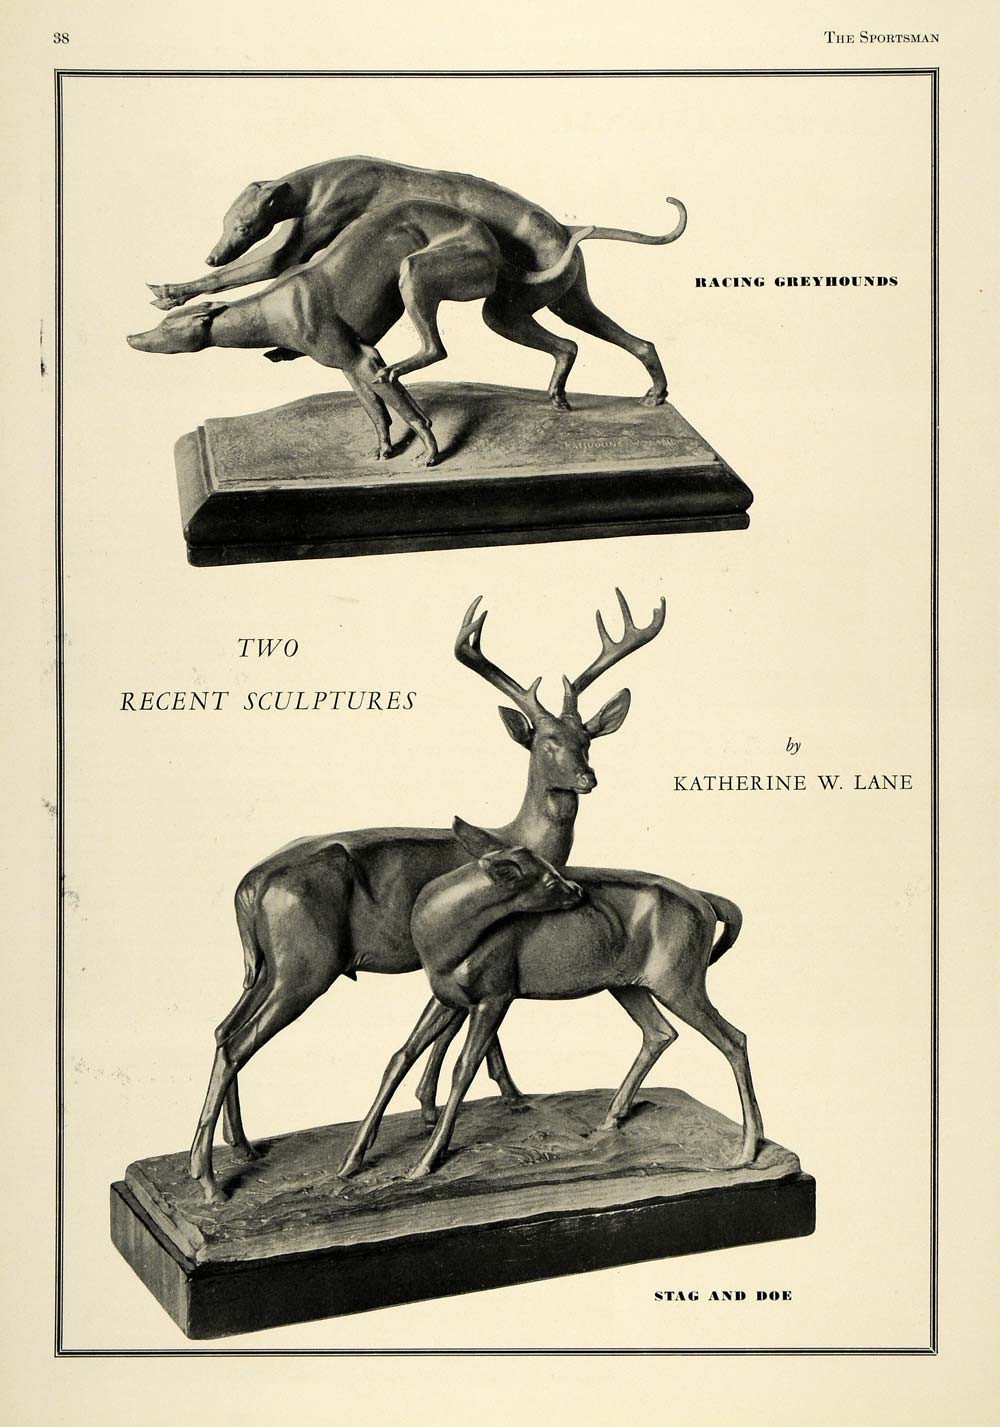 1936 Print Katherine W. Lane Greyhounds Deer Sculptures ORIGINAL HISTORIC SPM1